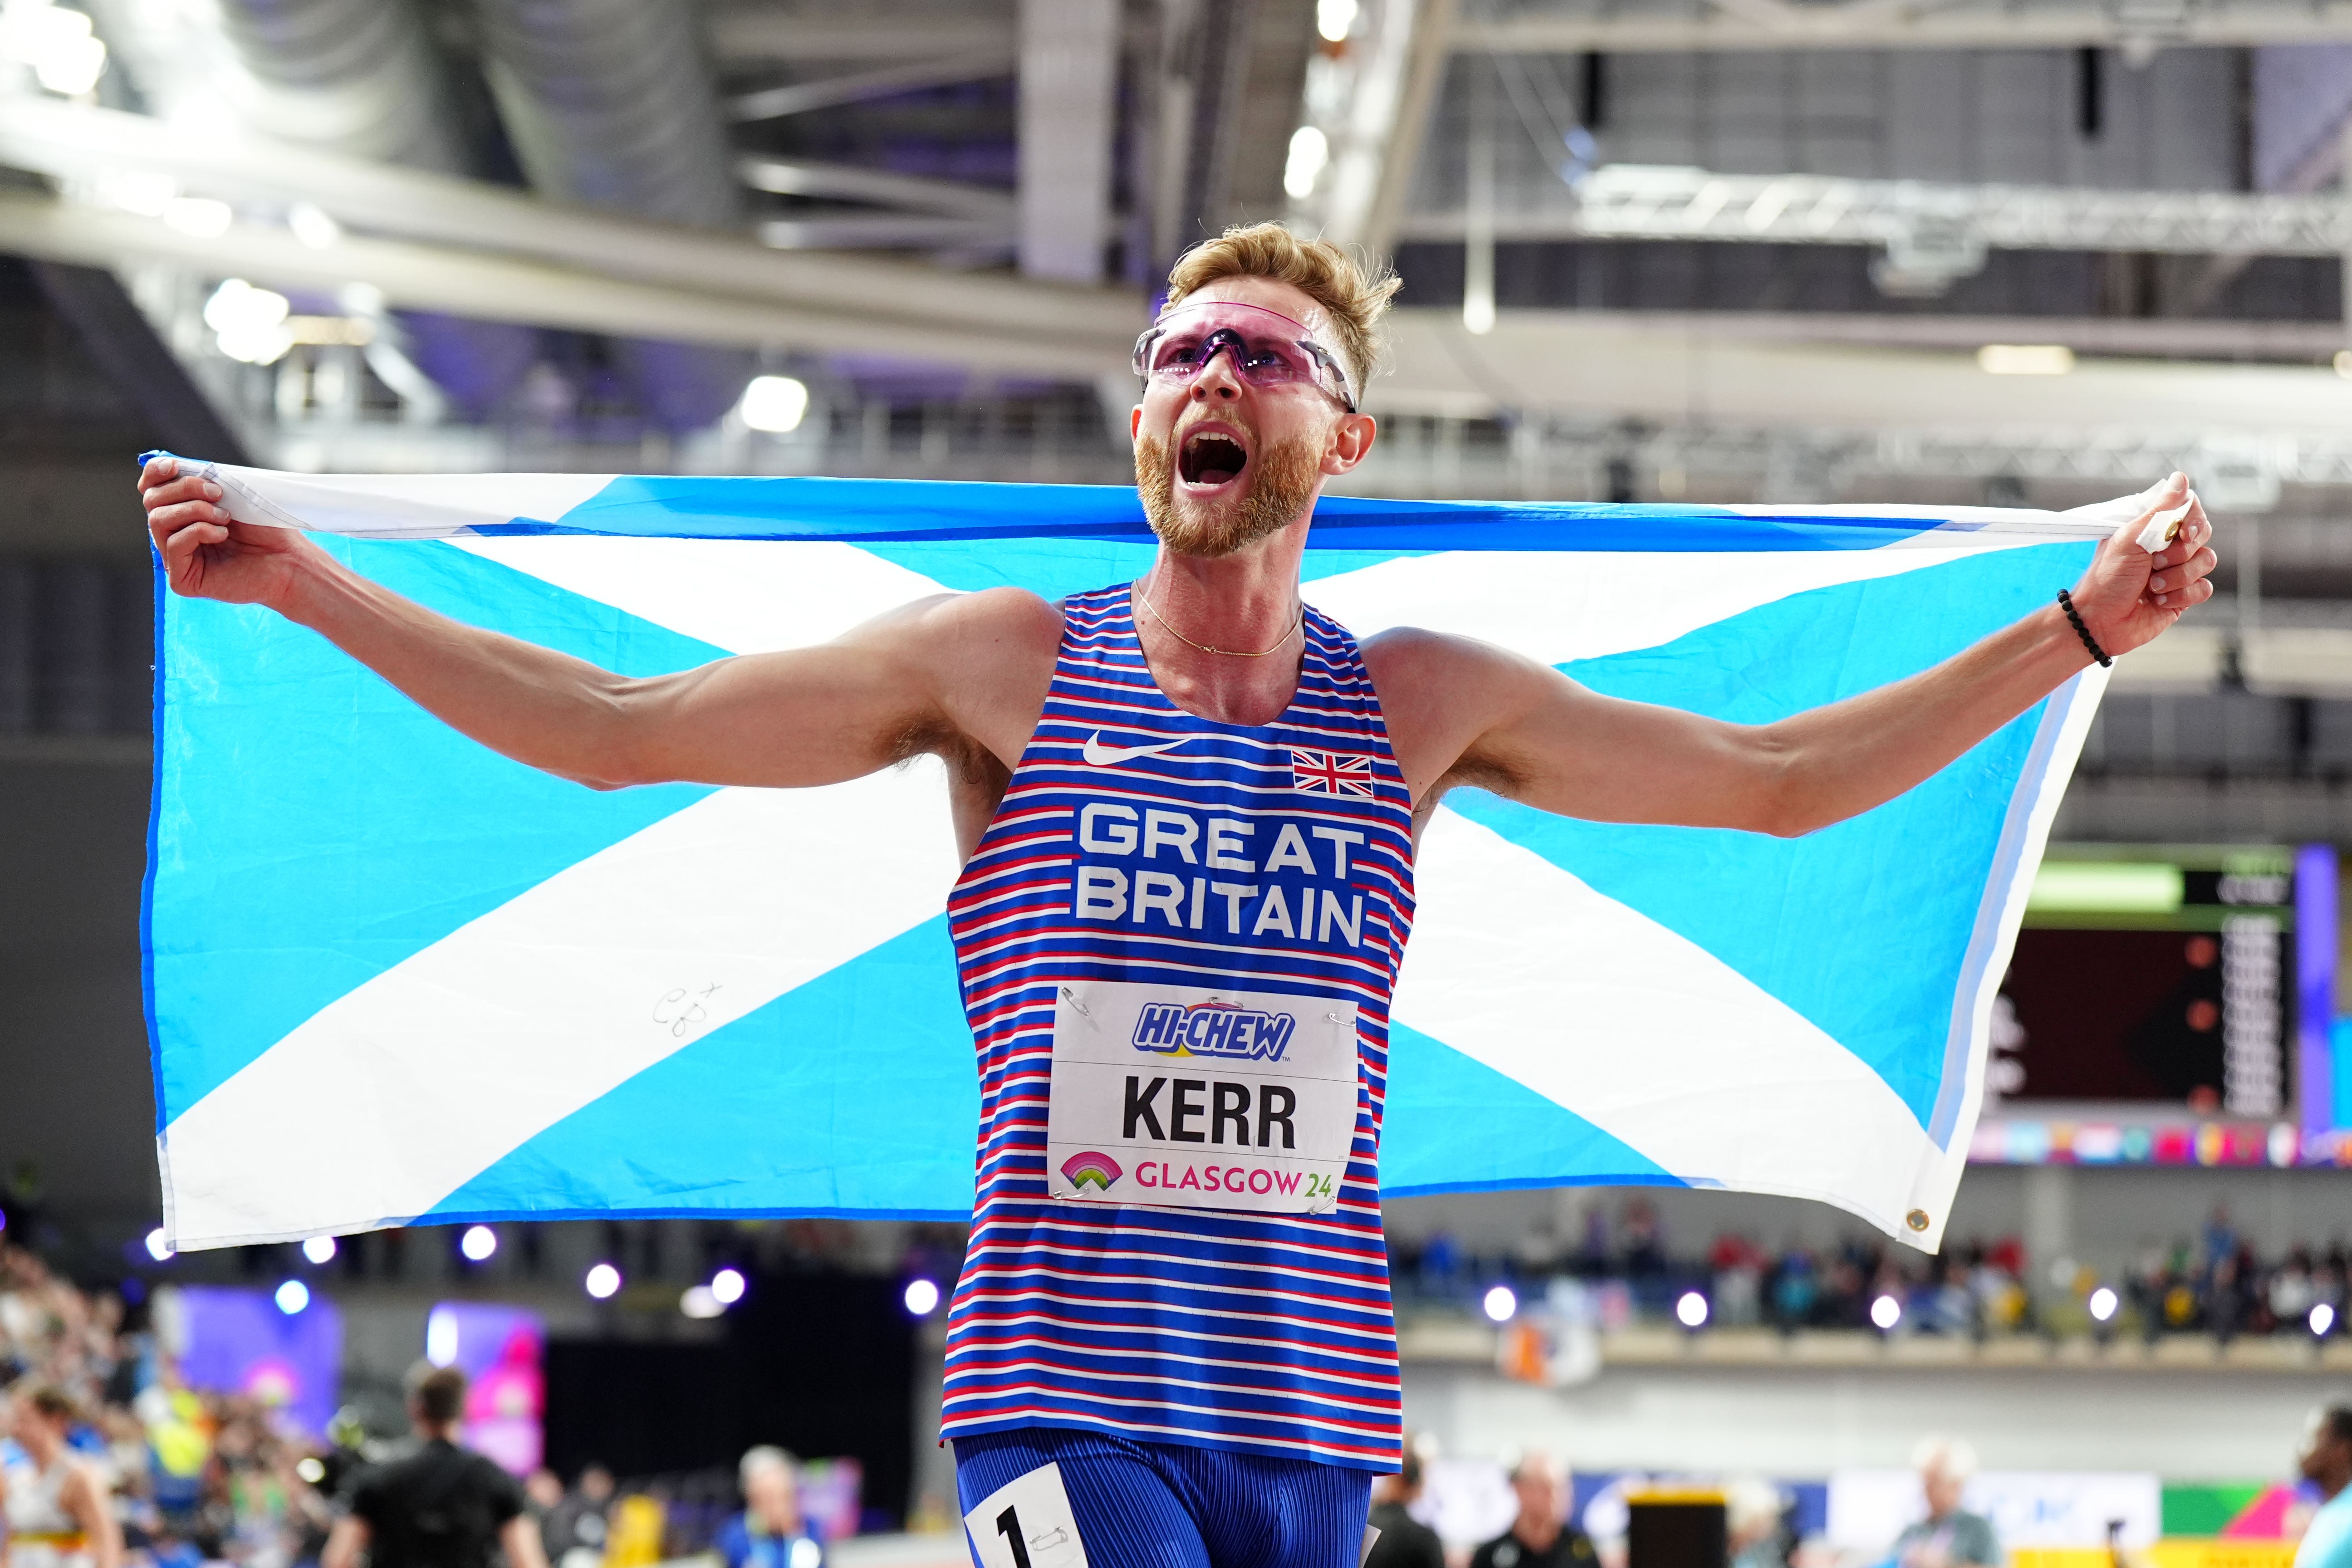 Great Britain’s Josh Kerr won 3,000m gold in Glasgow